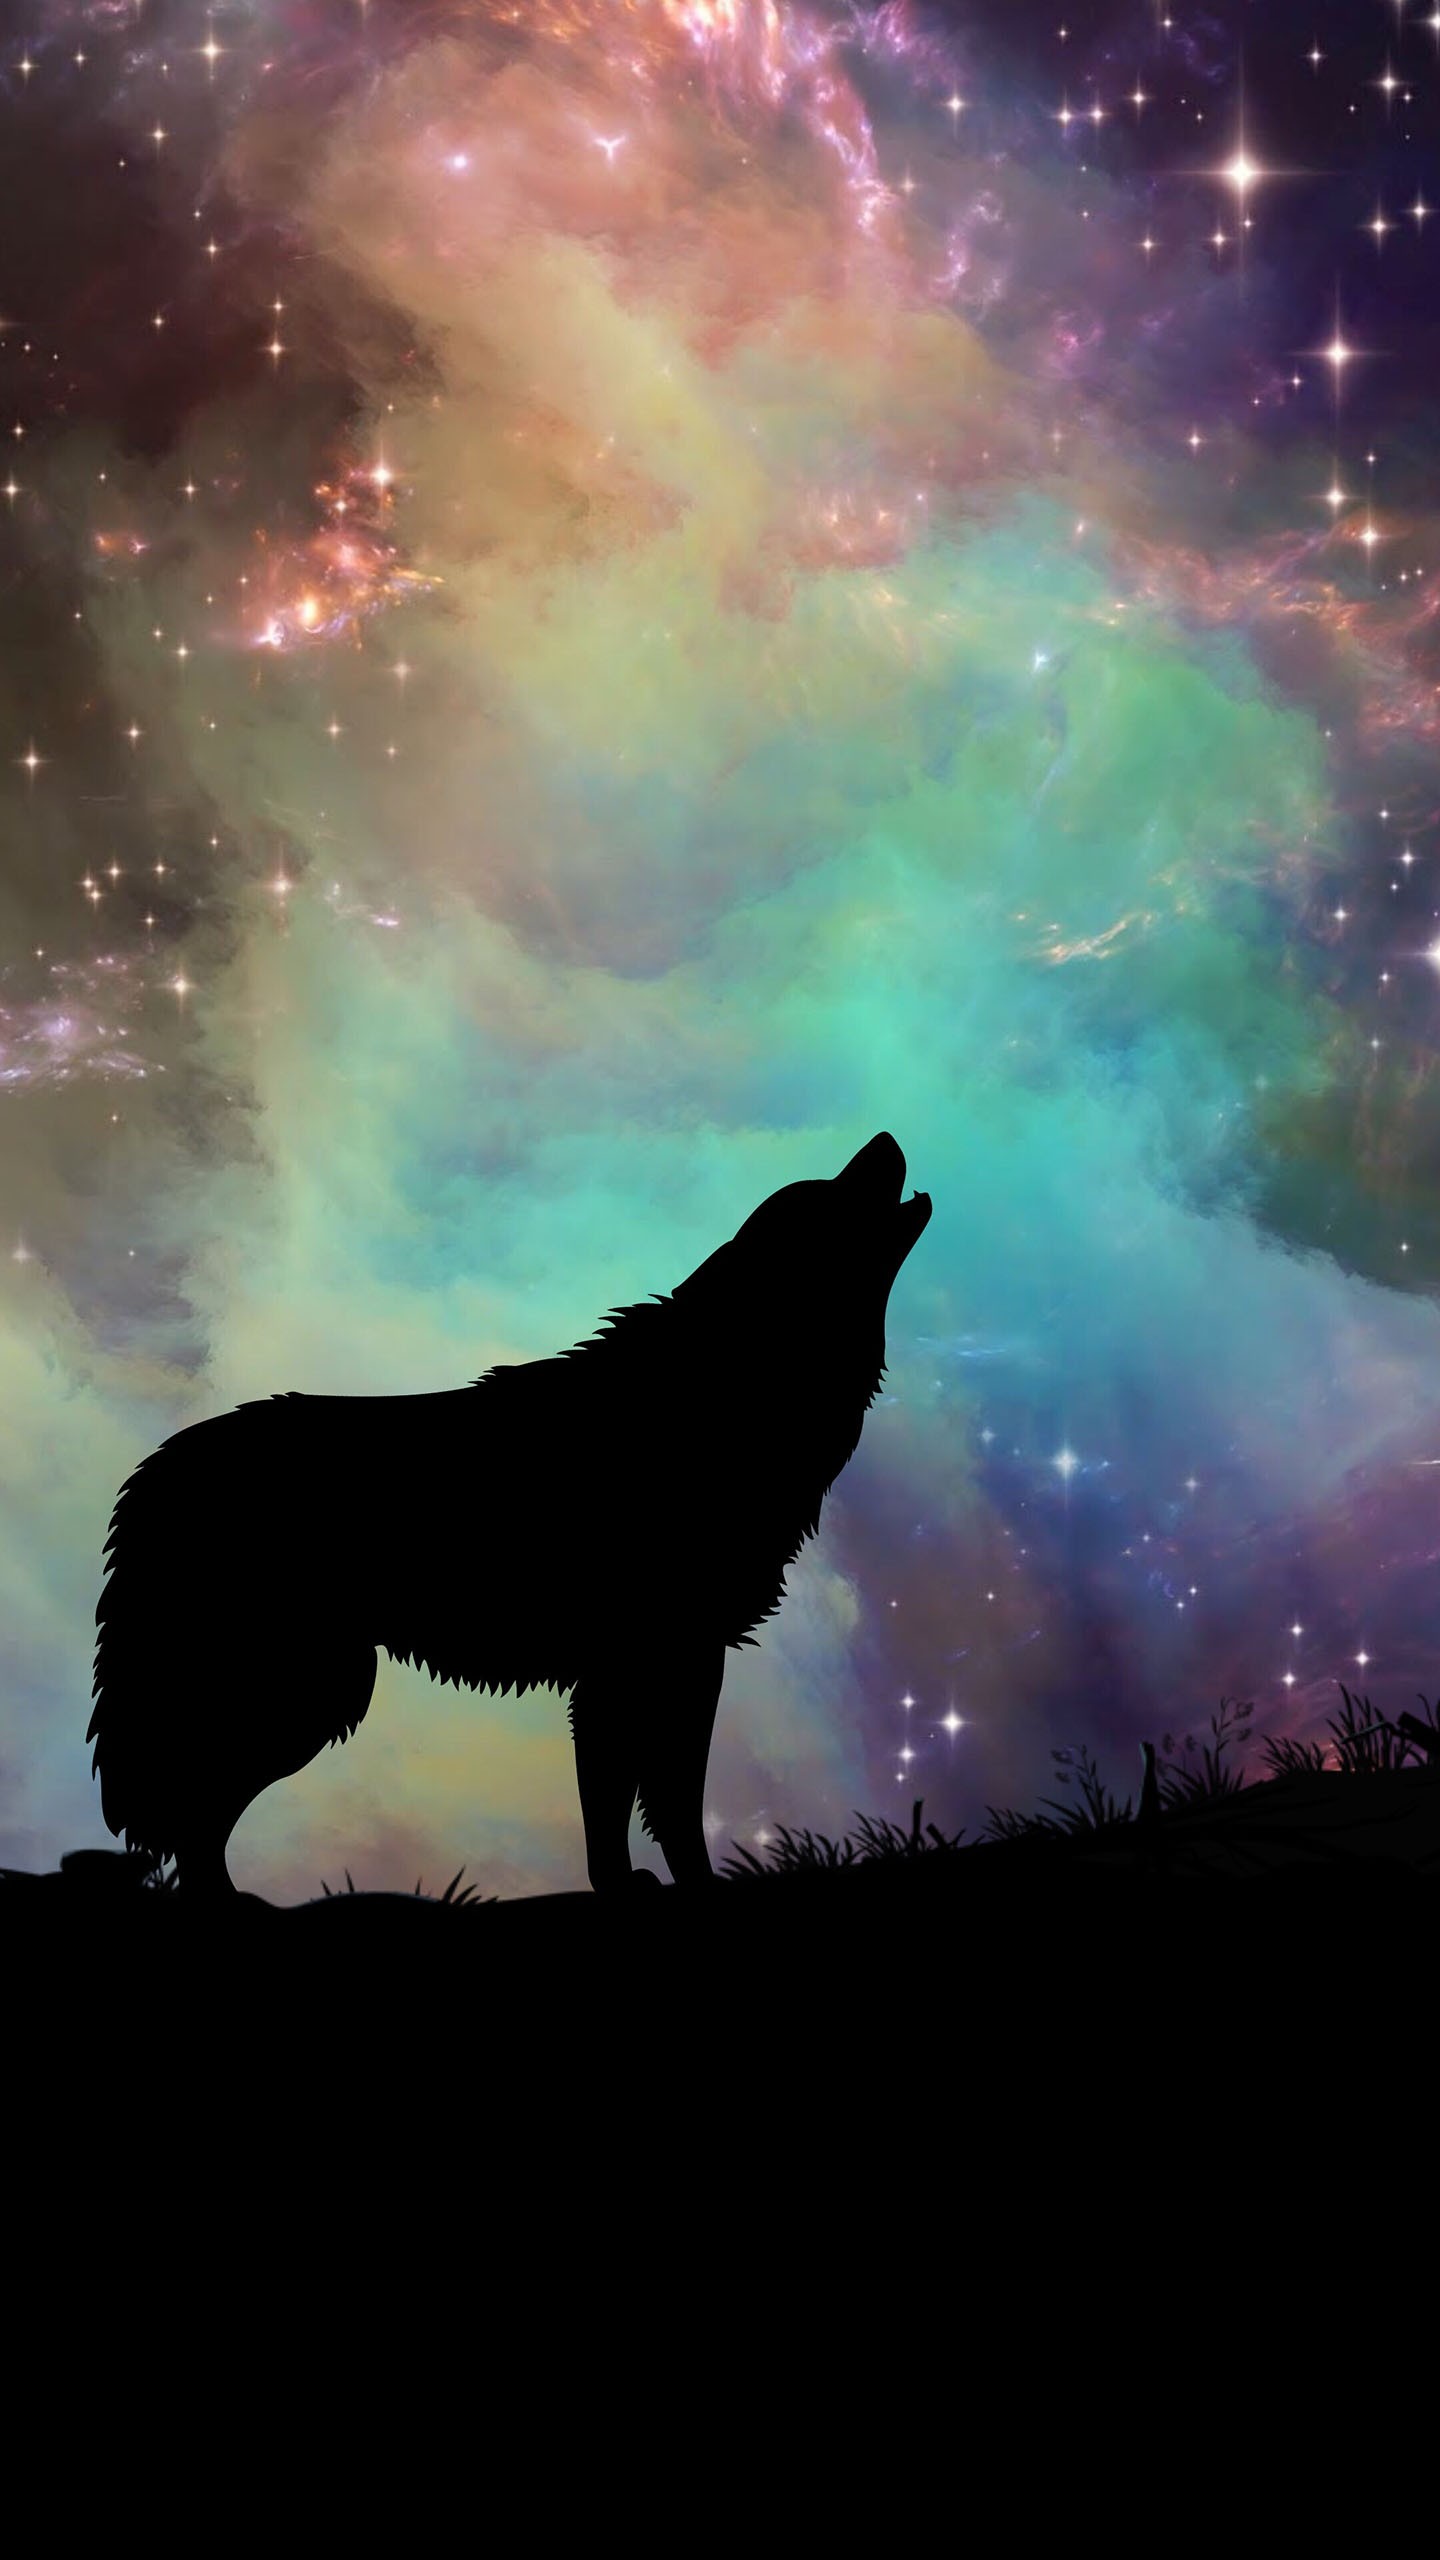 Nebula with Wolf Silhouette